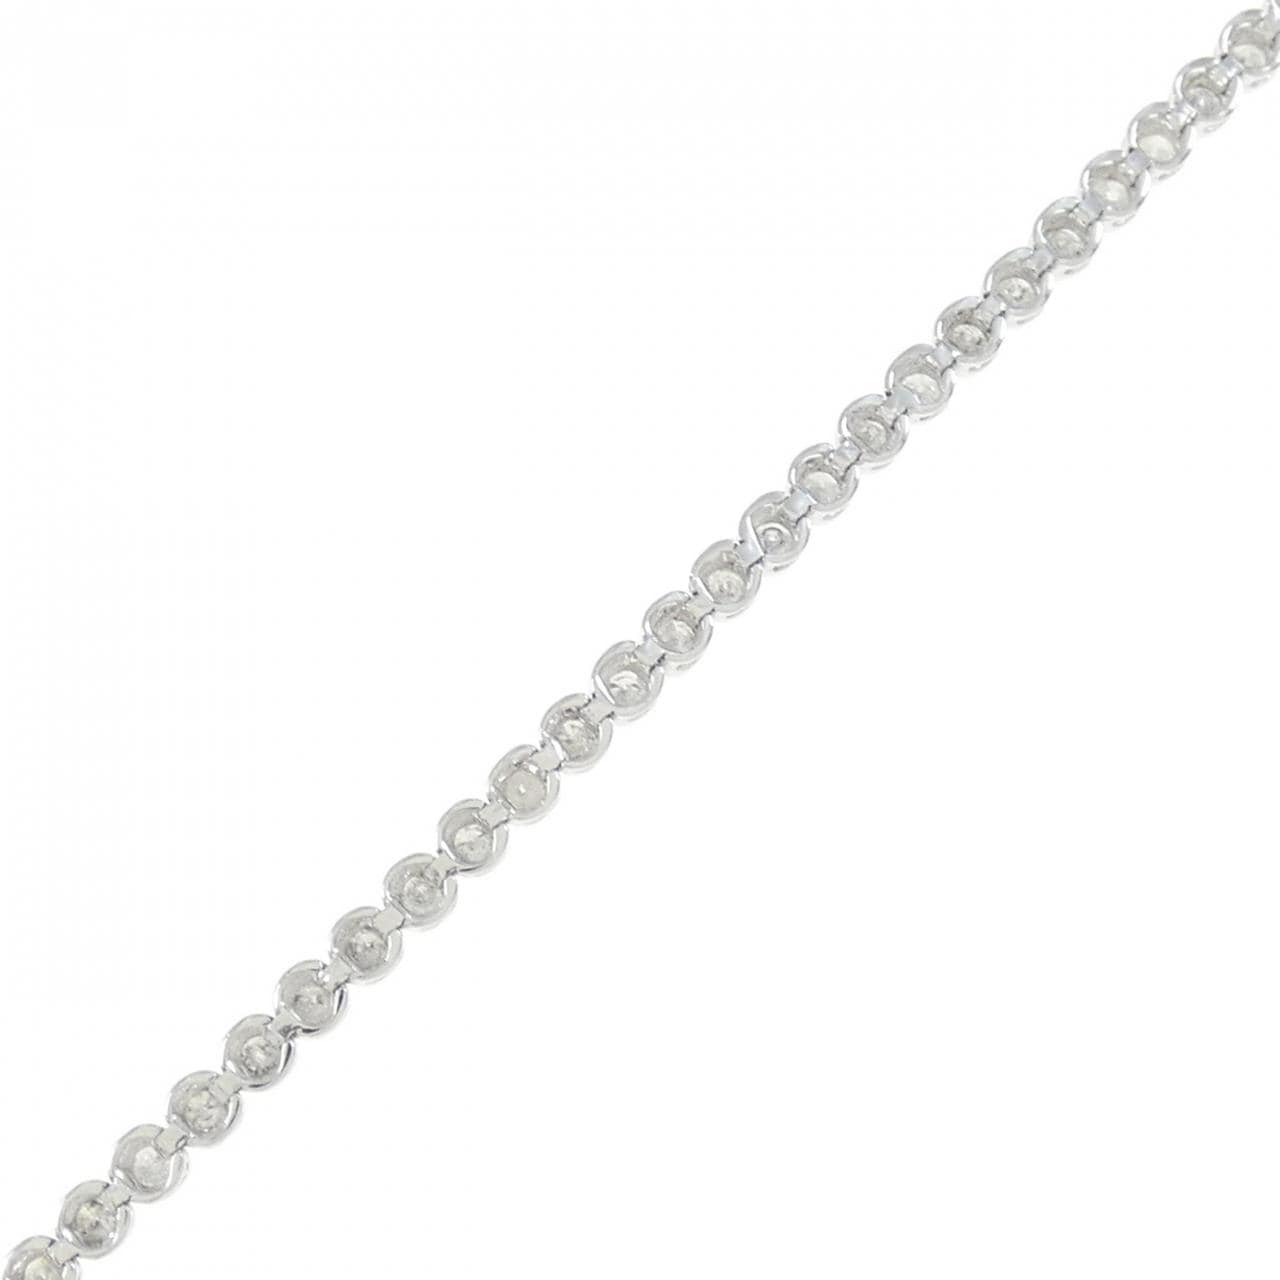 K18WG Diamond bracelet 1.02CT